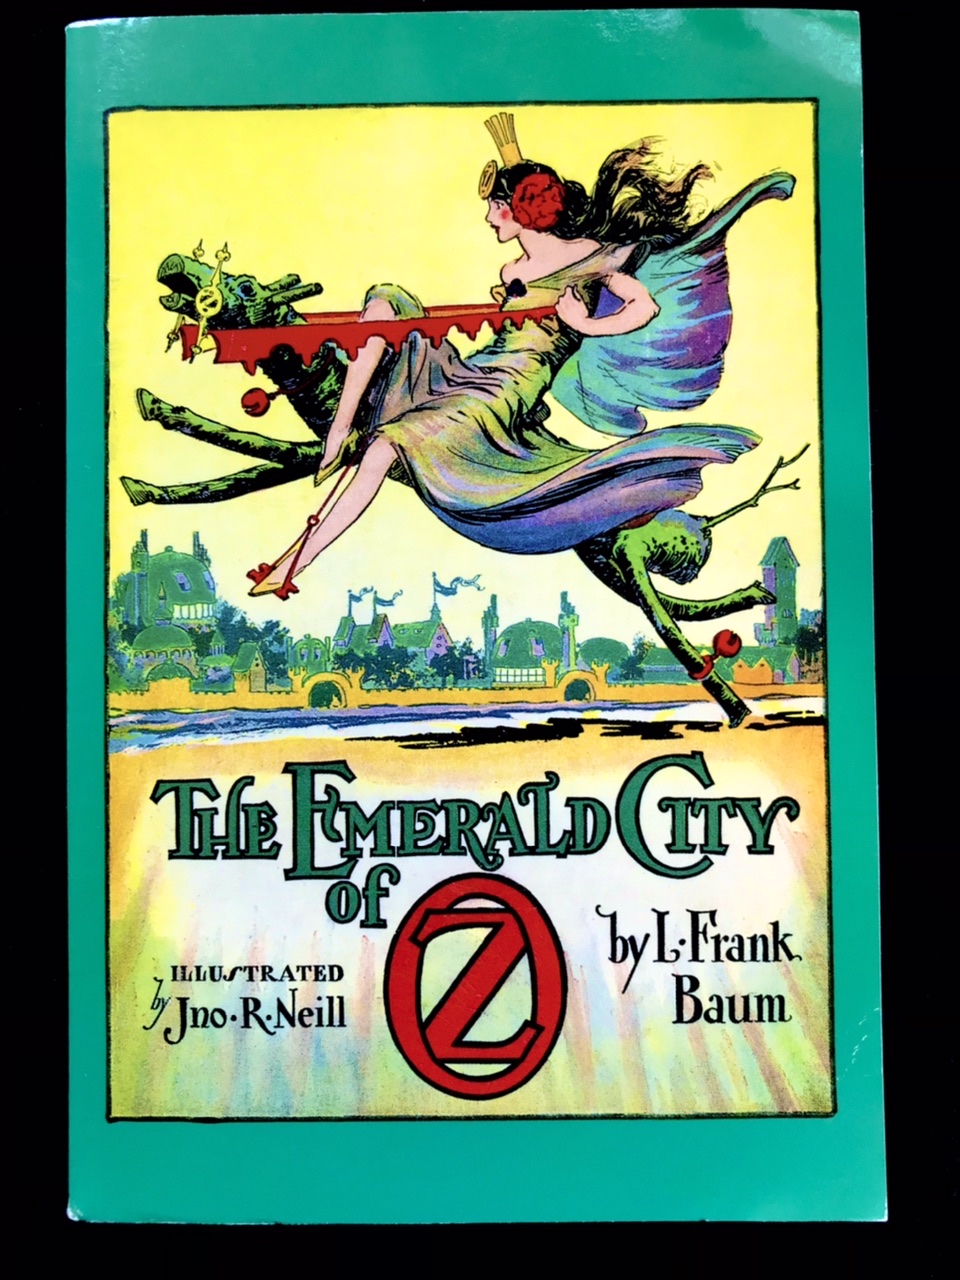 The Wizard of Oz by L. Frank Baum, Bundle #2